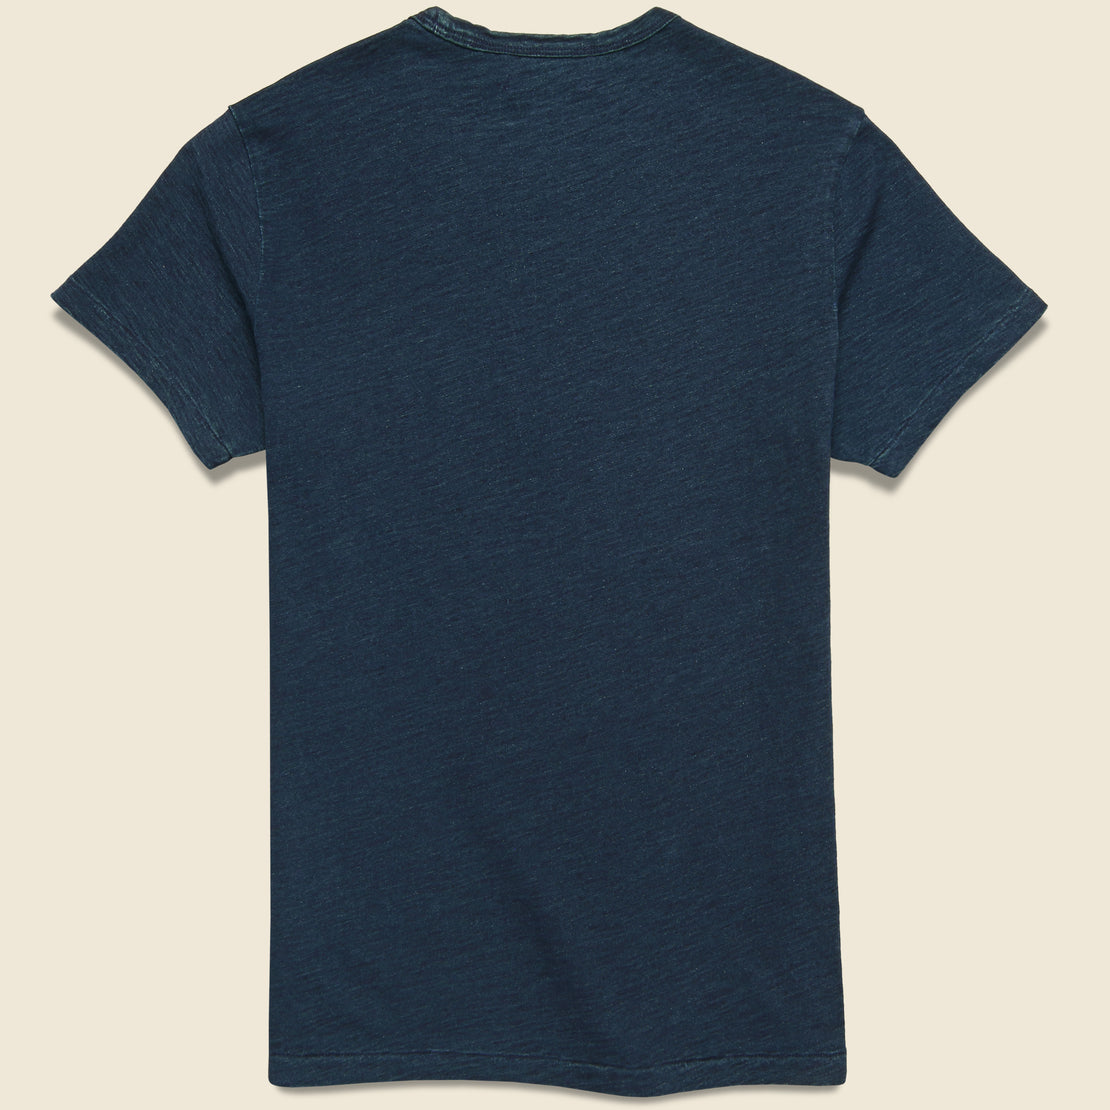 Indigo Cotton Crewneck T-Shirt - Indigo - RRL - STAG Provisions - Tops - S/S Tee